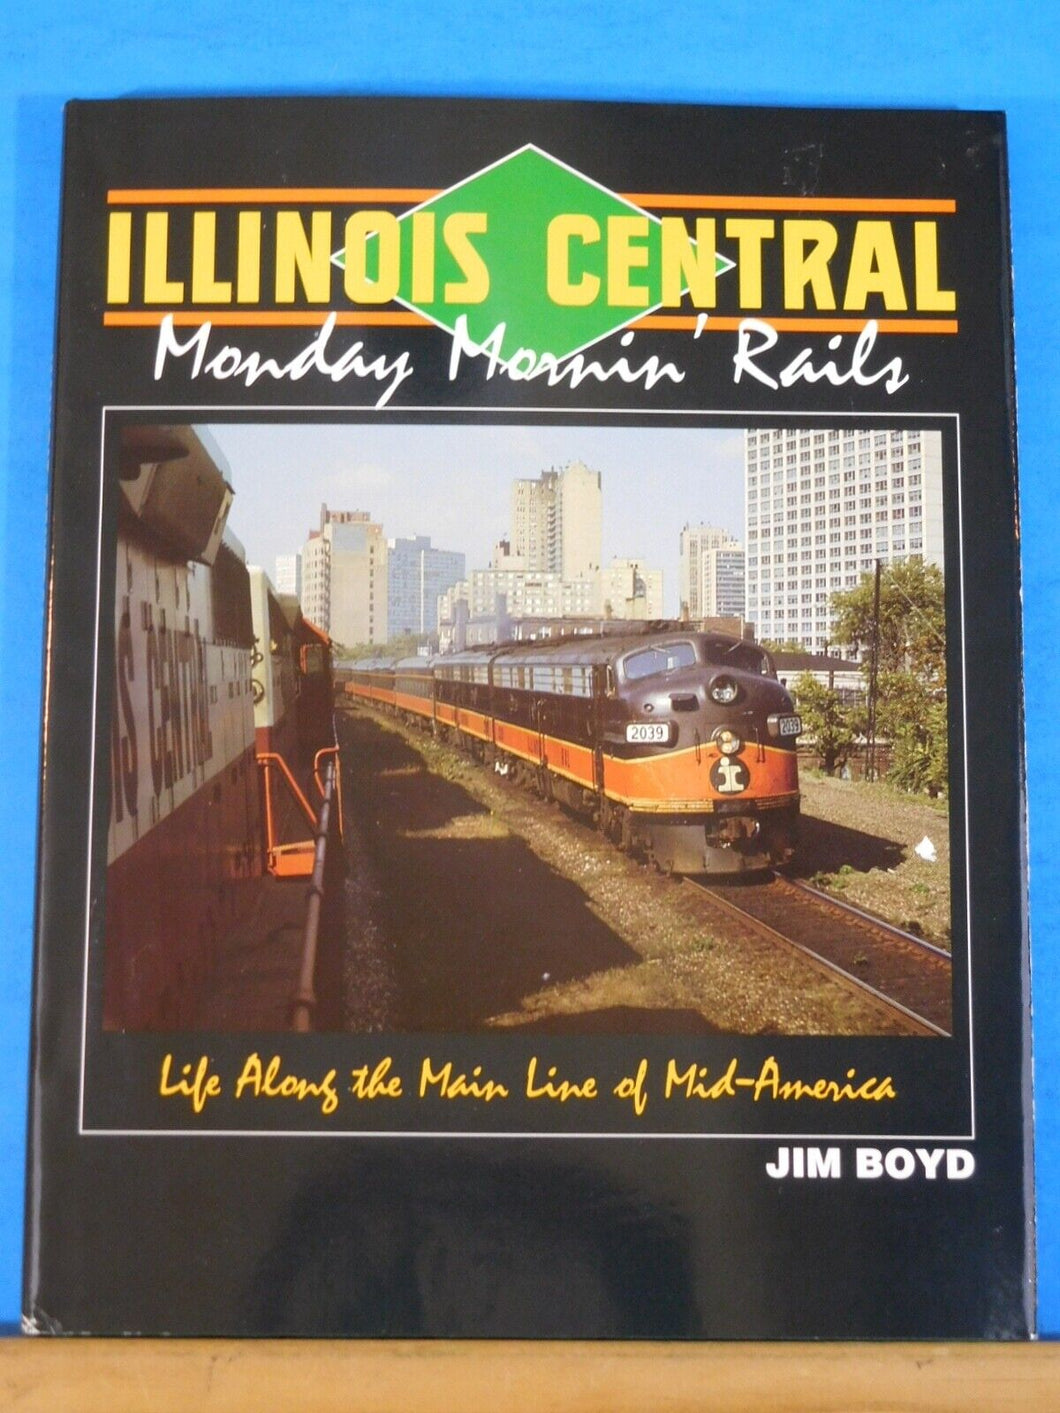 Illinois Central Monday Mornin Rails Life Along the Main Line of Mid America